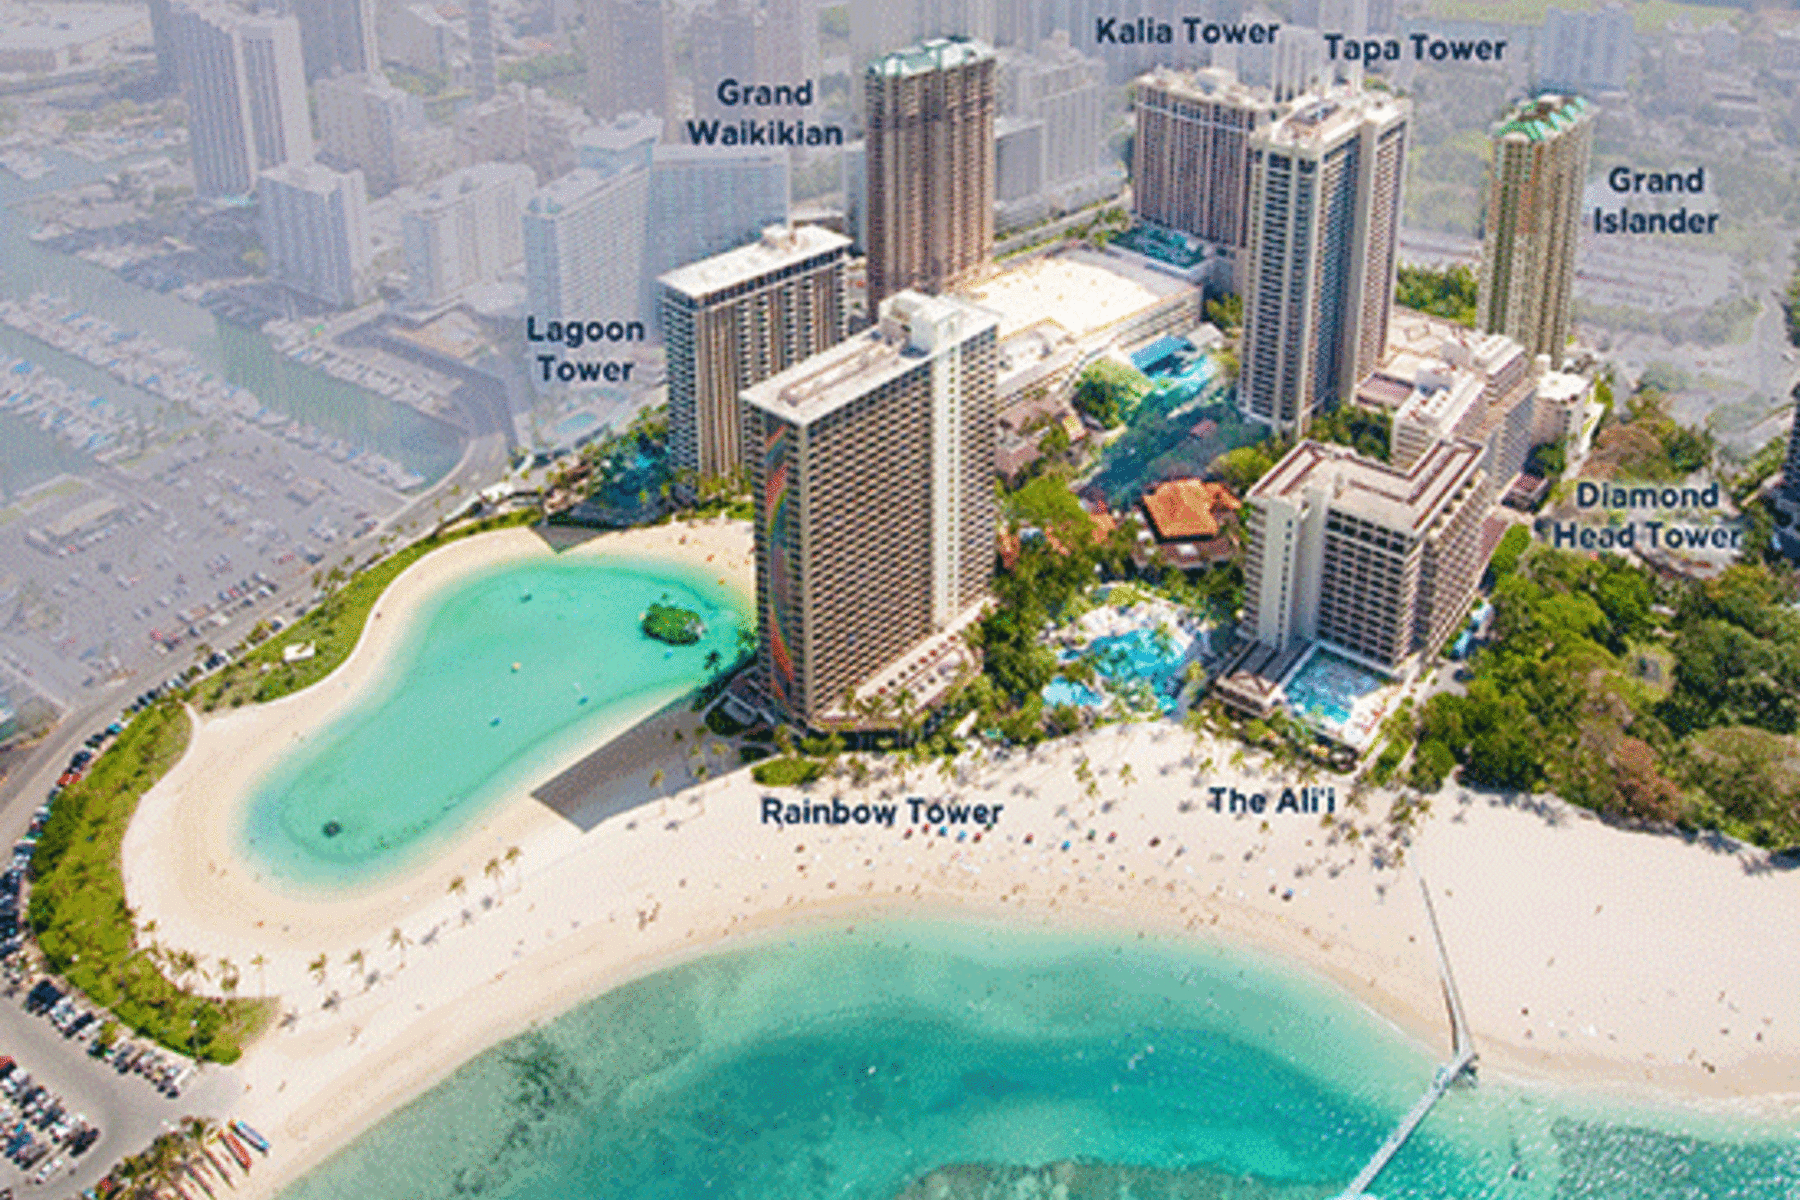 How to get to Hilton Hawaiian Village Waikiki Beach Resort in